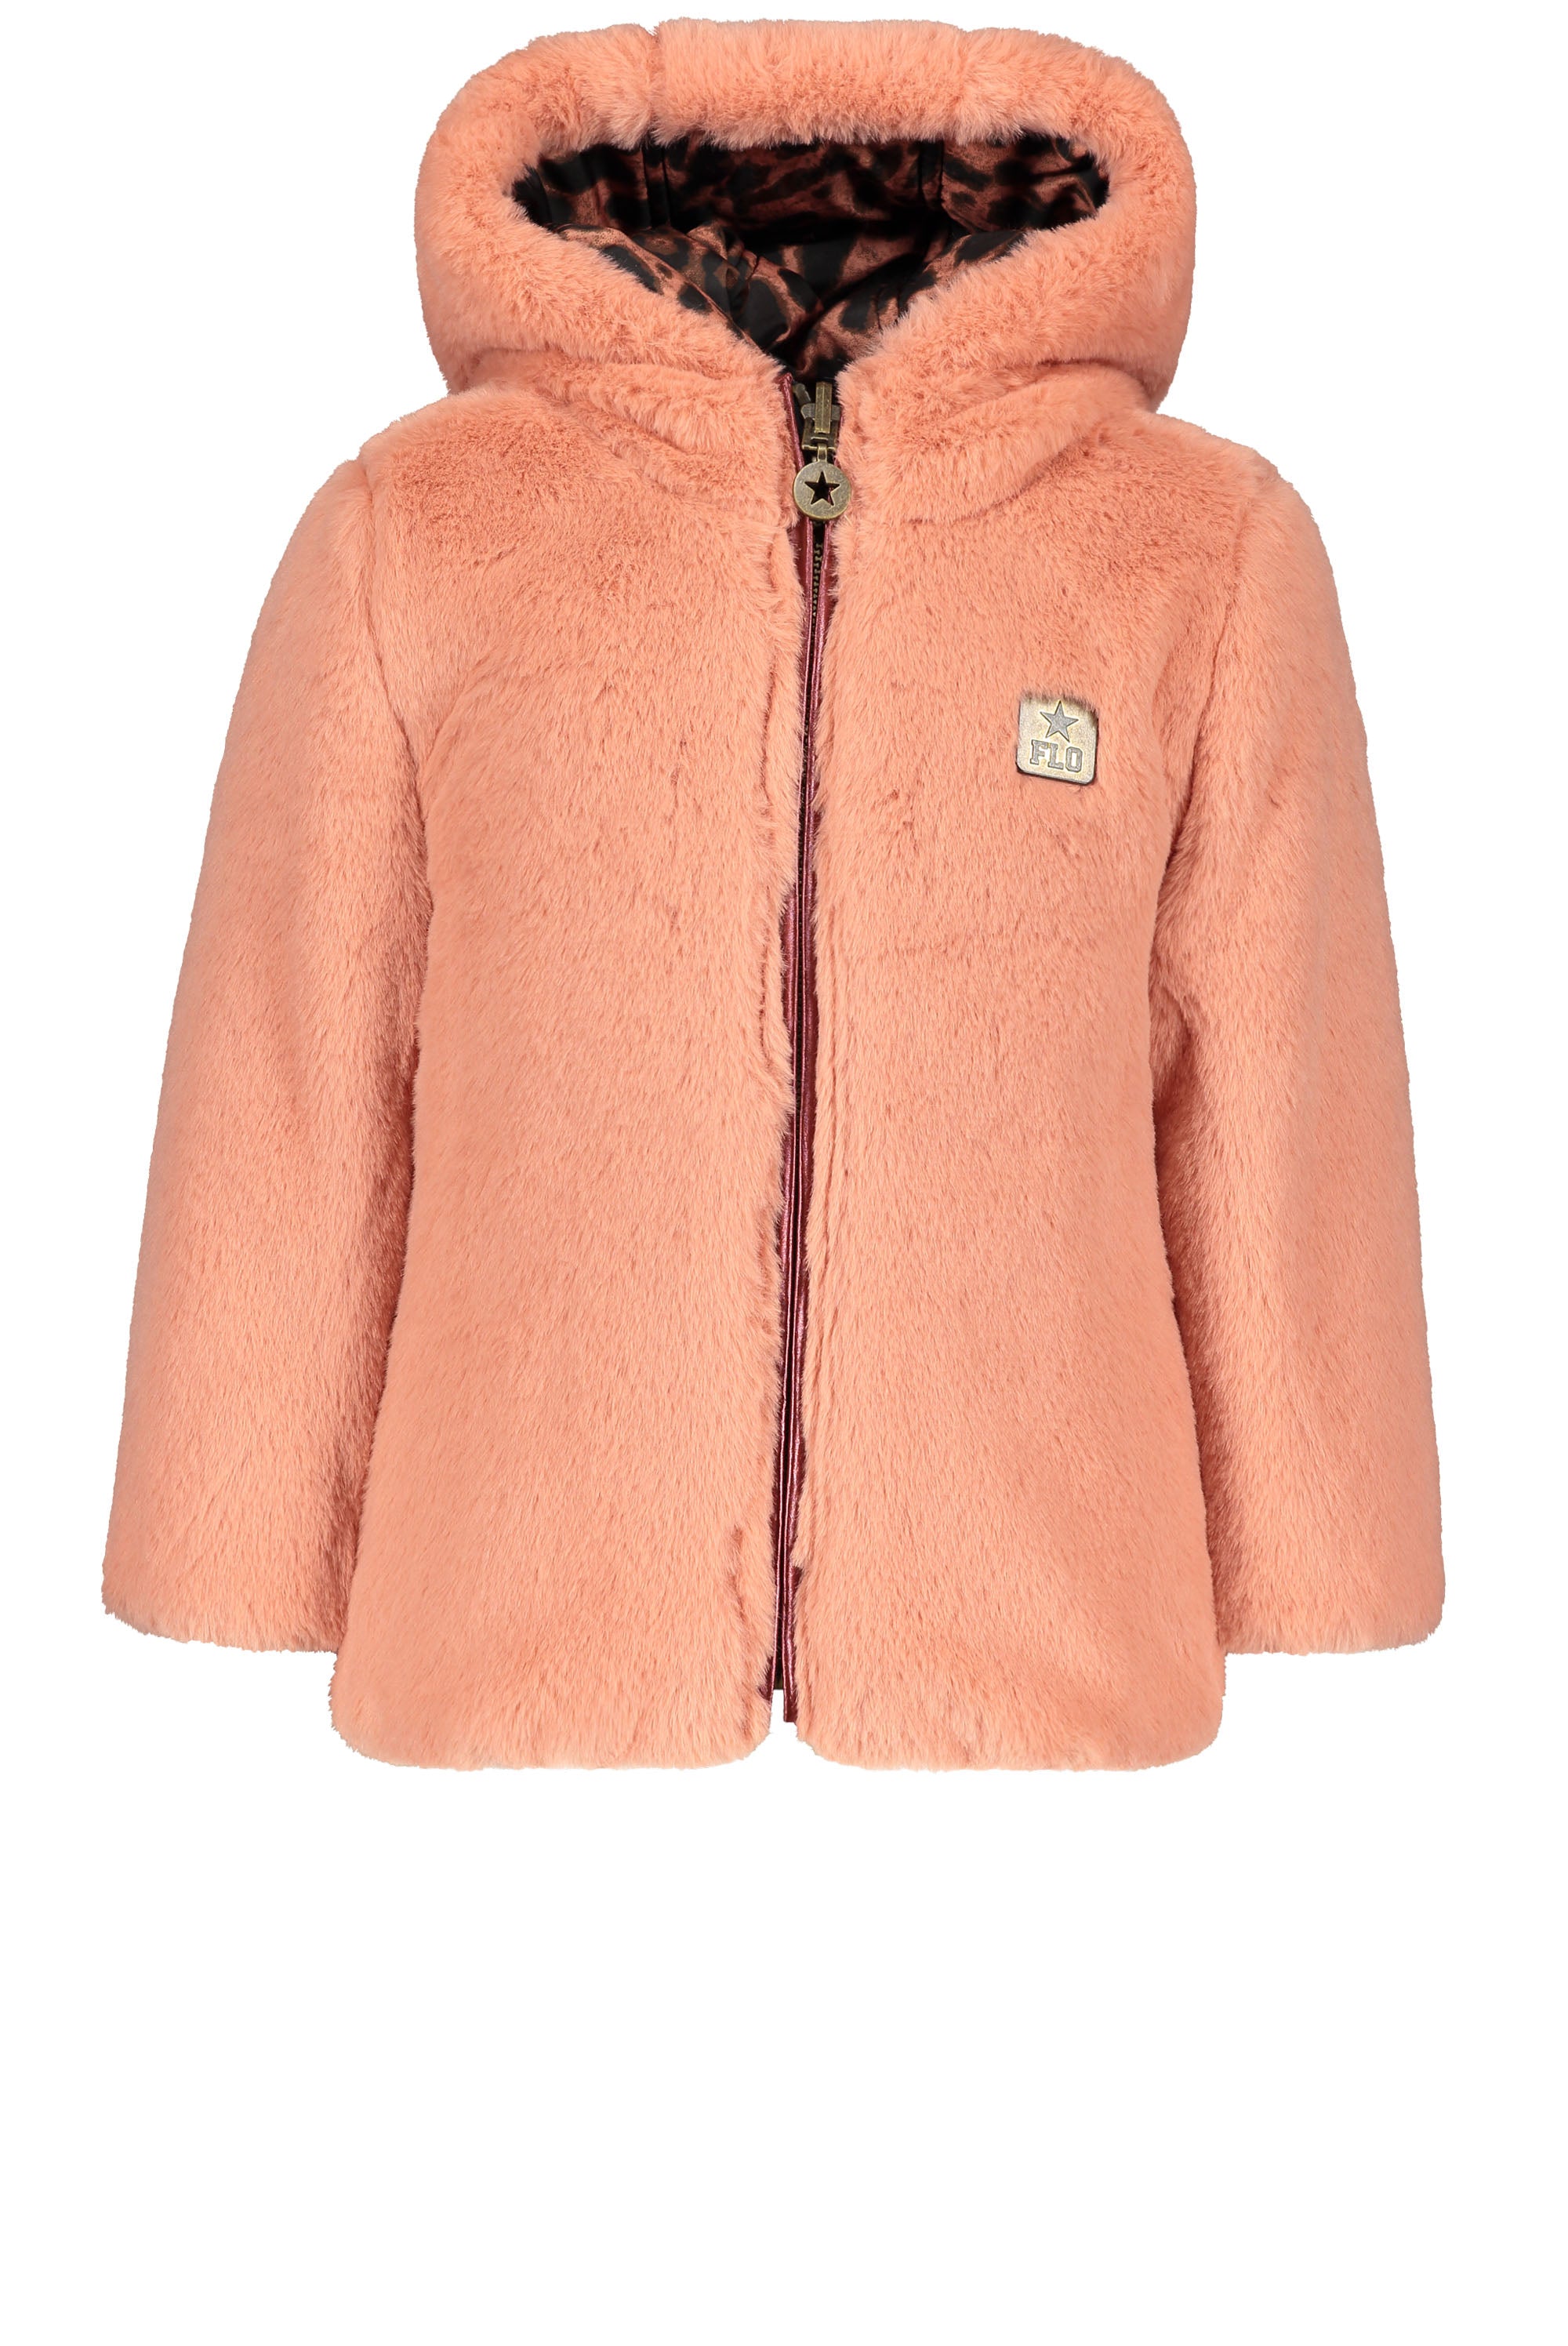 Flo Flo baby girls reversible hooded jacket pink